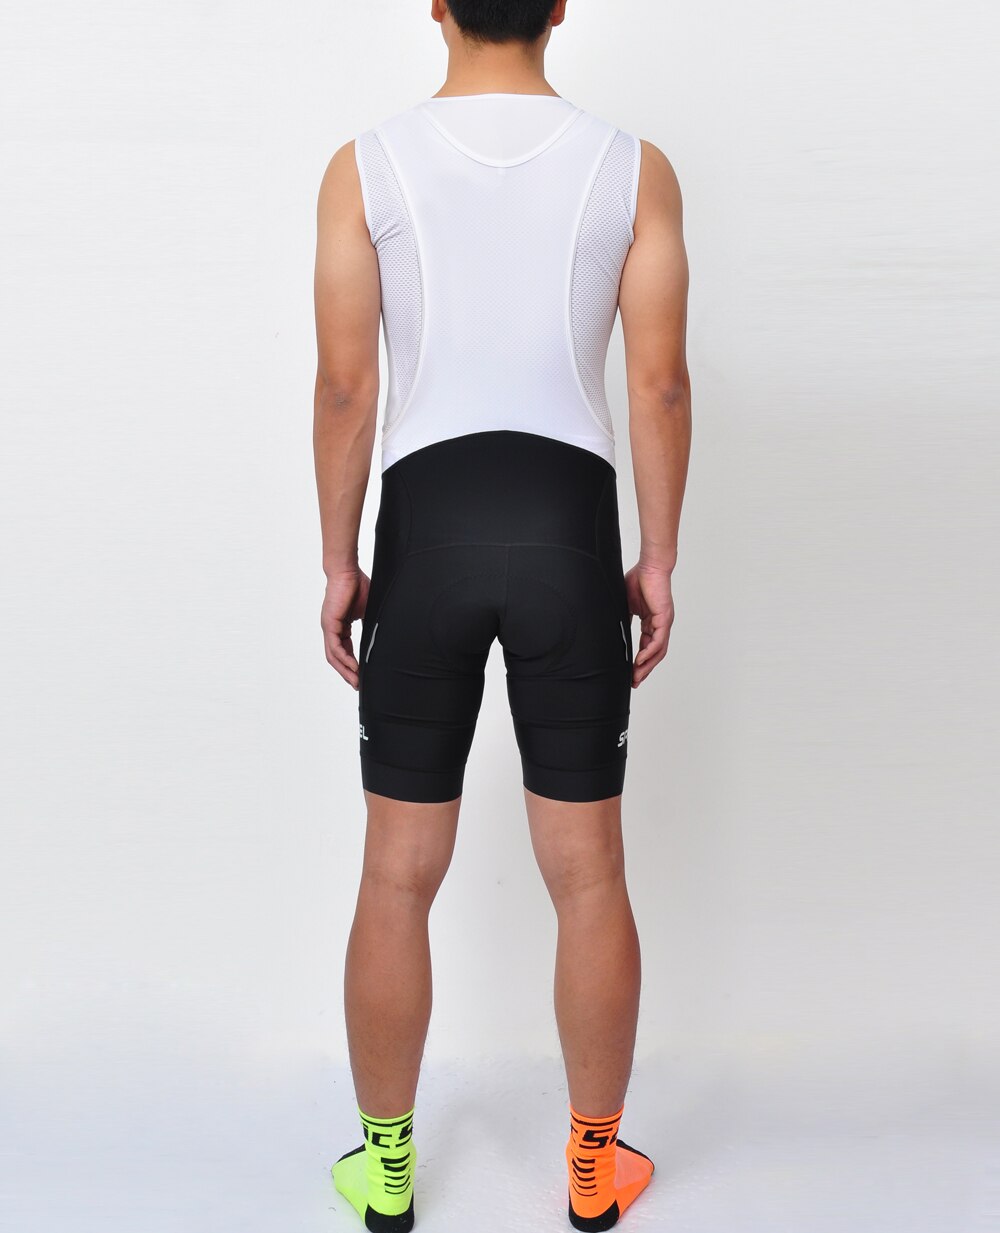 Bare opdater spexcel superlight pro team basislag ærmeløs cykeltøj hurtigtørrende skjorte mand kvinde mesh under skjorte